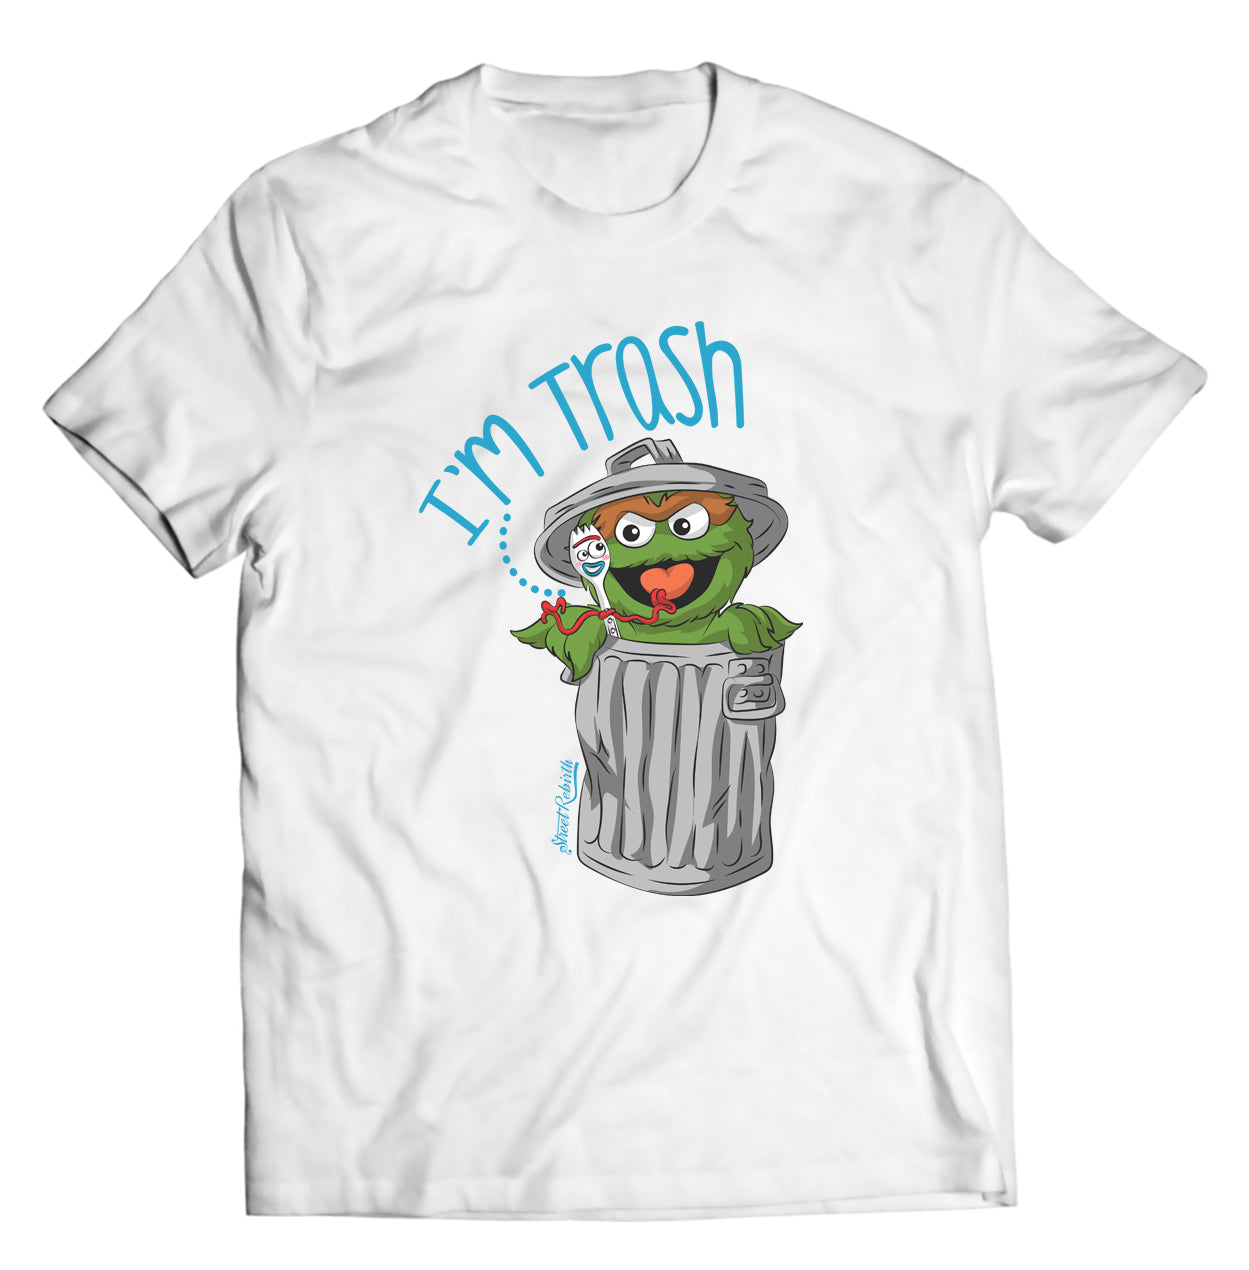 Im Trash Shirt - Direct To Garment Quality Print - Unisex Shirt - Gift For Him or Her